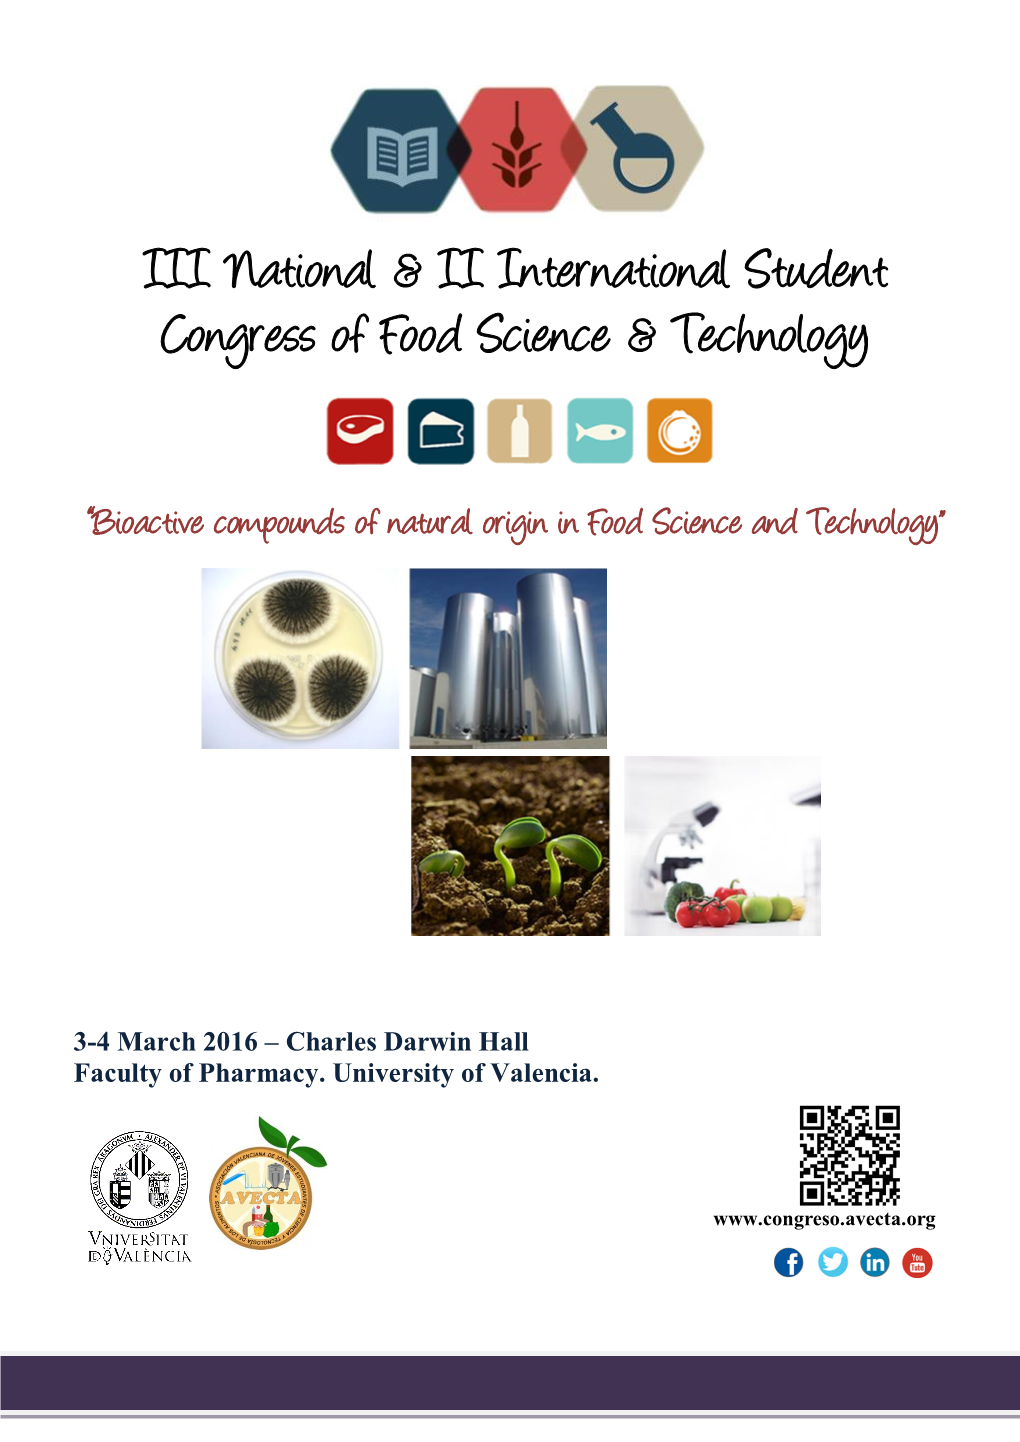 III National & II International Student Congress of Food Science & Technology